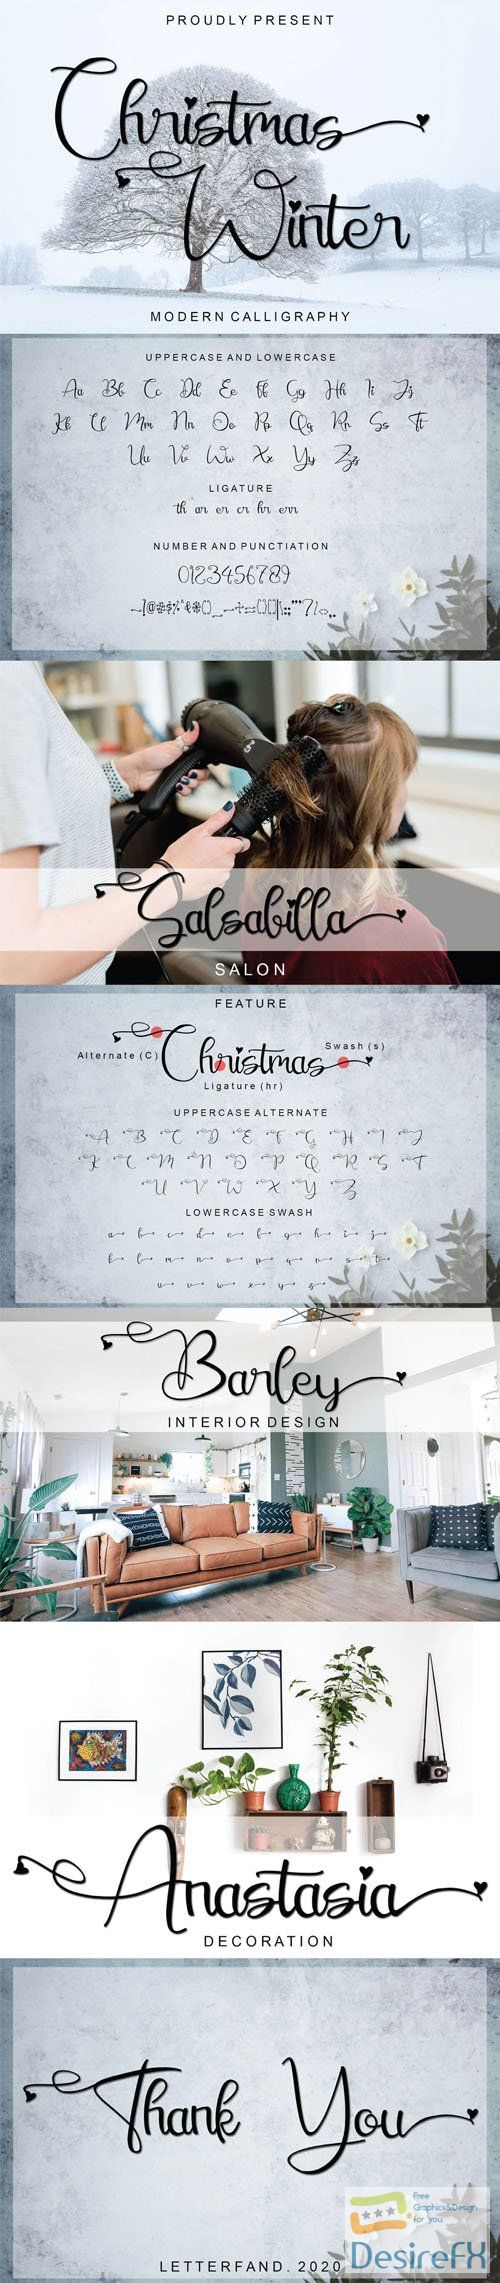 Christmas Winter - Modern Calligraphy Font